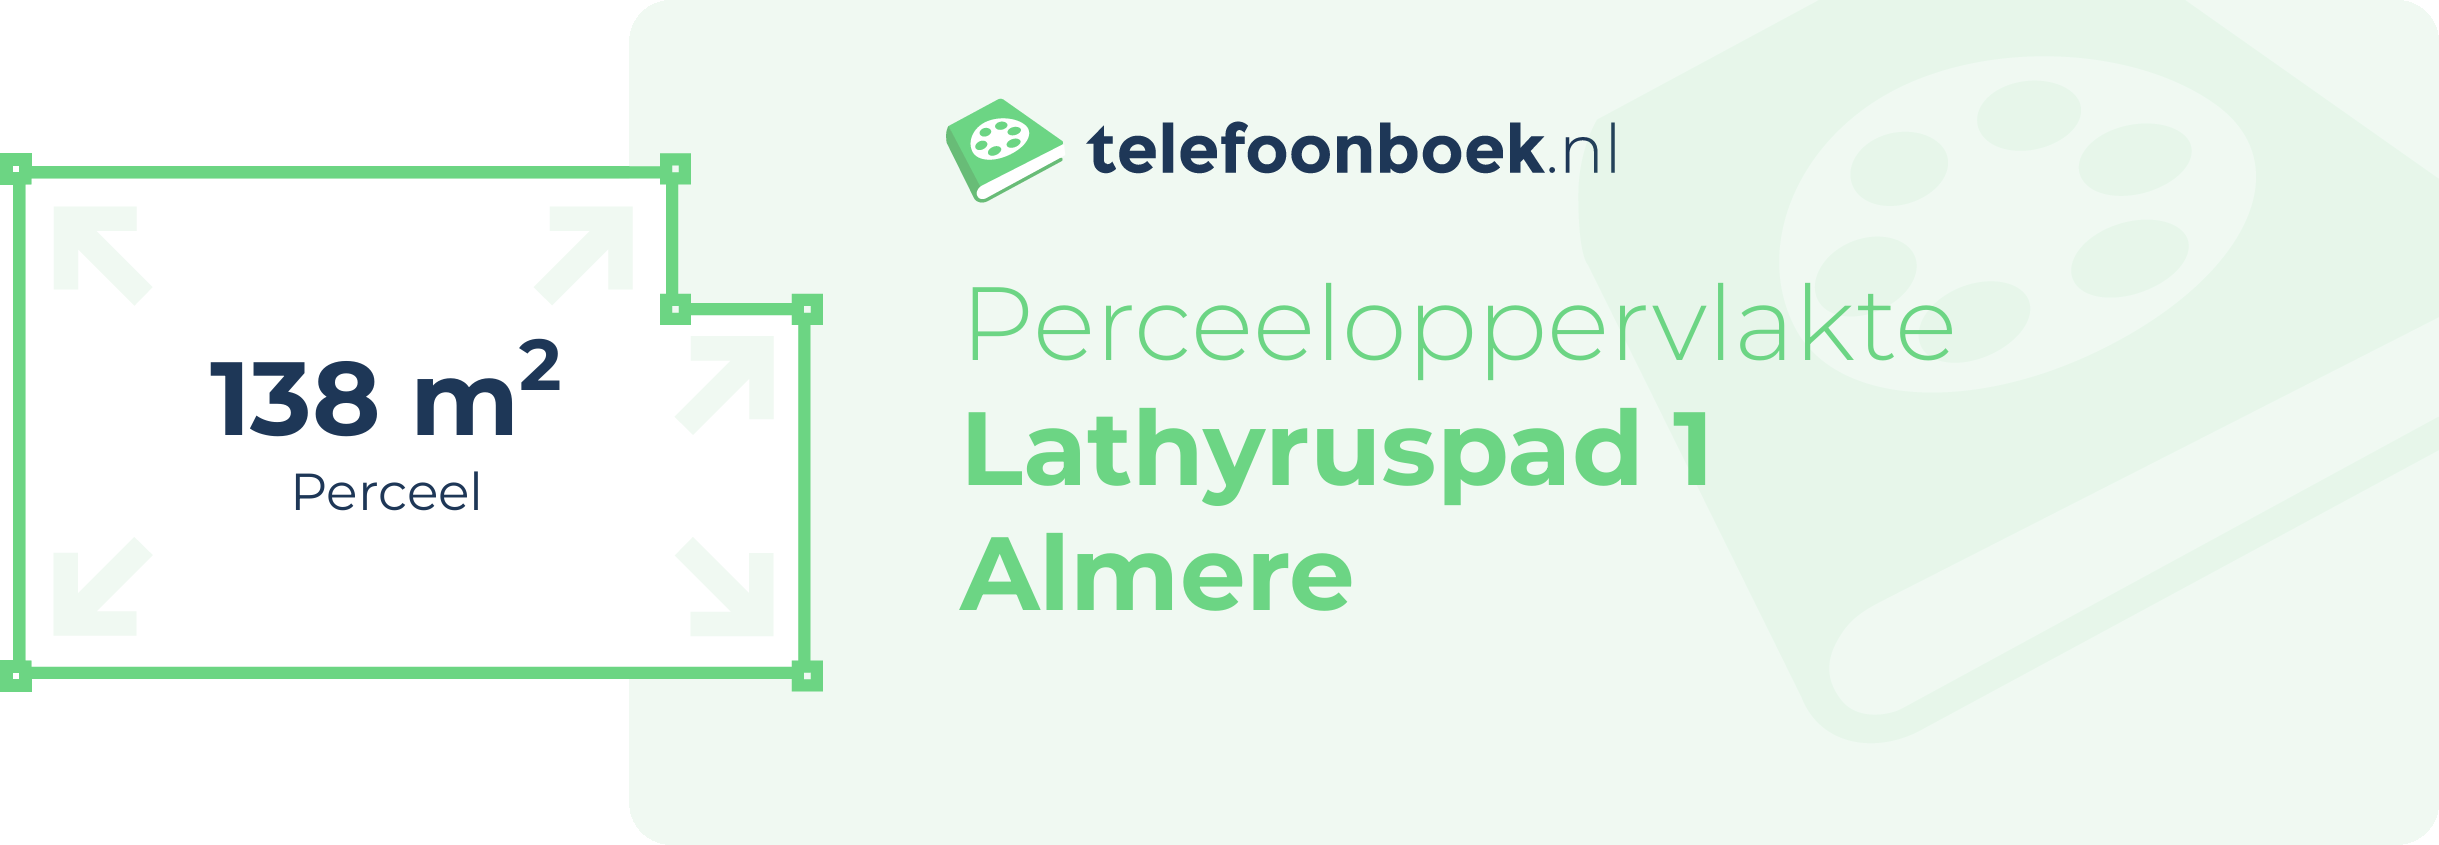 Perceeloppervlakte Lathyruspad 1 Almere